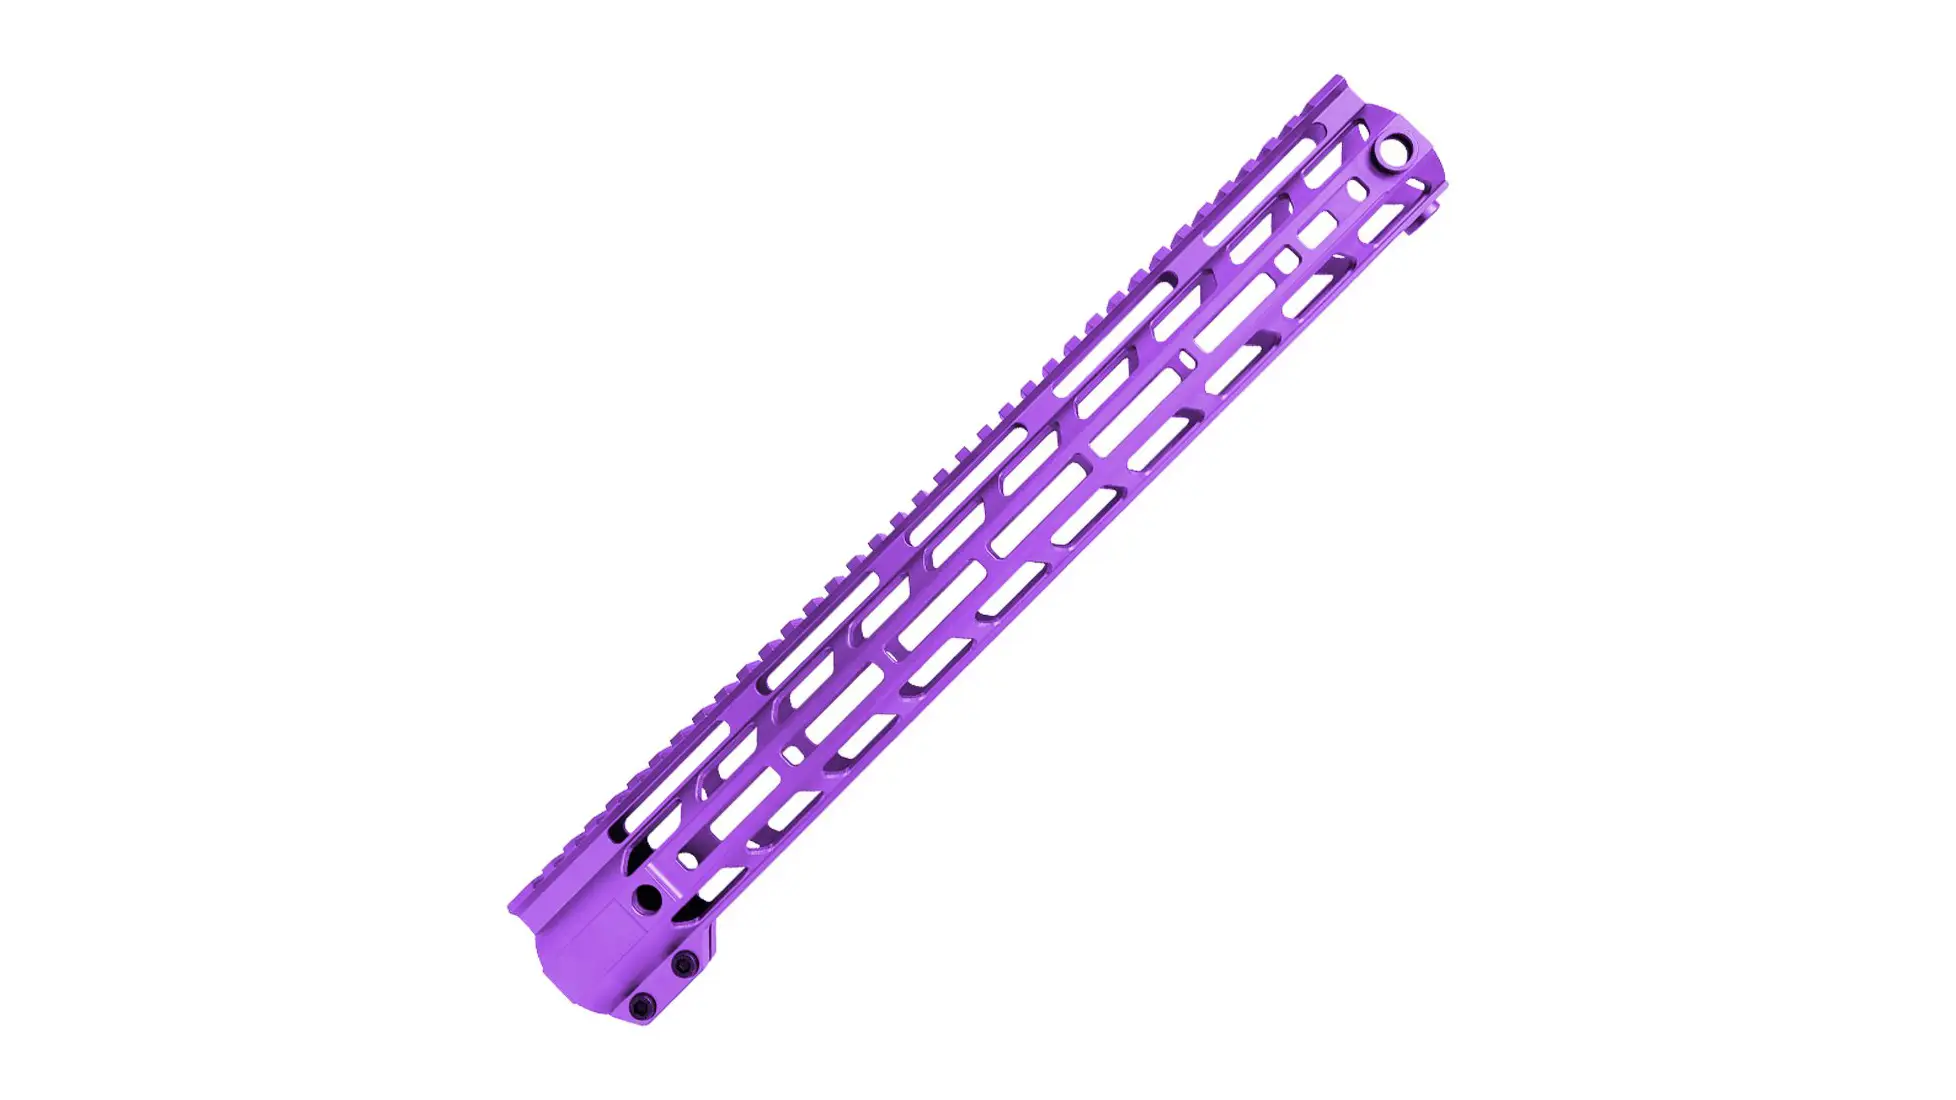 opplanet-xts-m-lok-handguard-anodized-purple-15in-xts-adz15-pp-main@2x